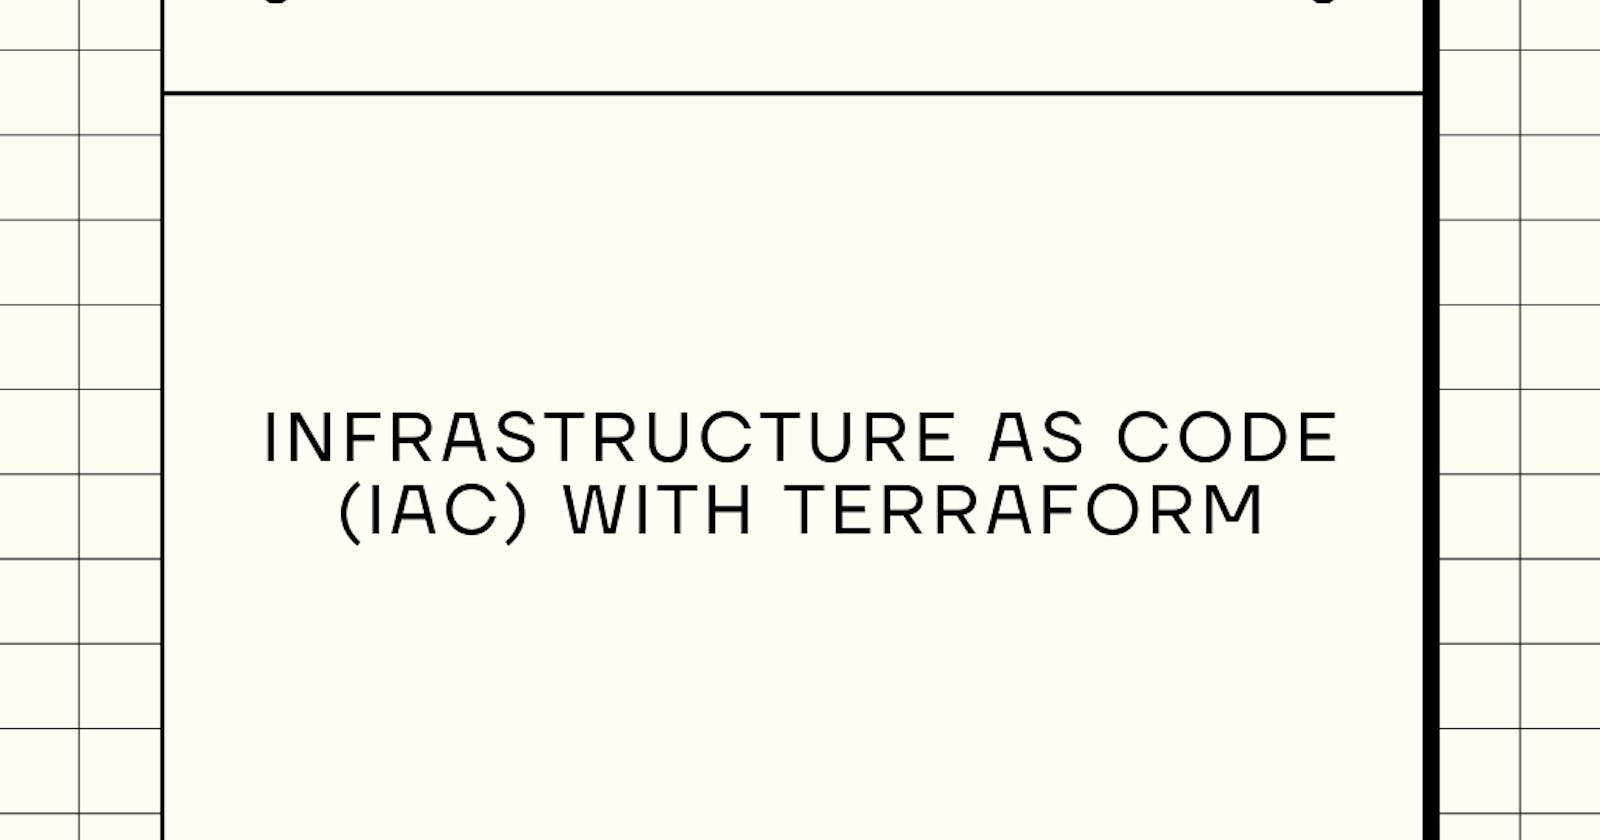 Infrastructure as Code (IaC) with Terraform